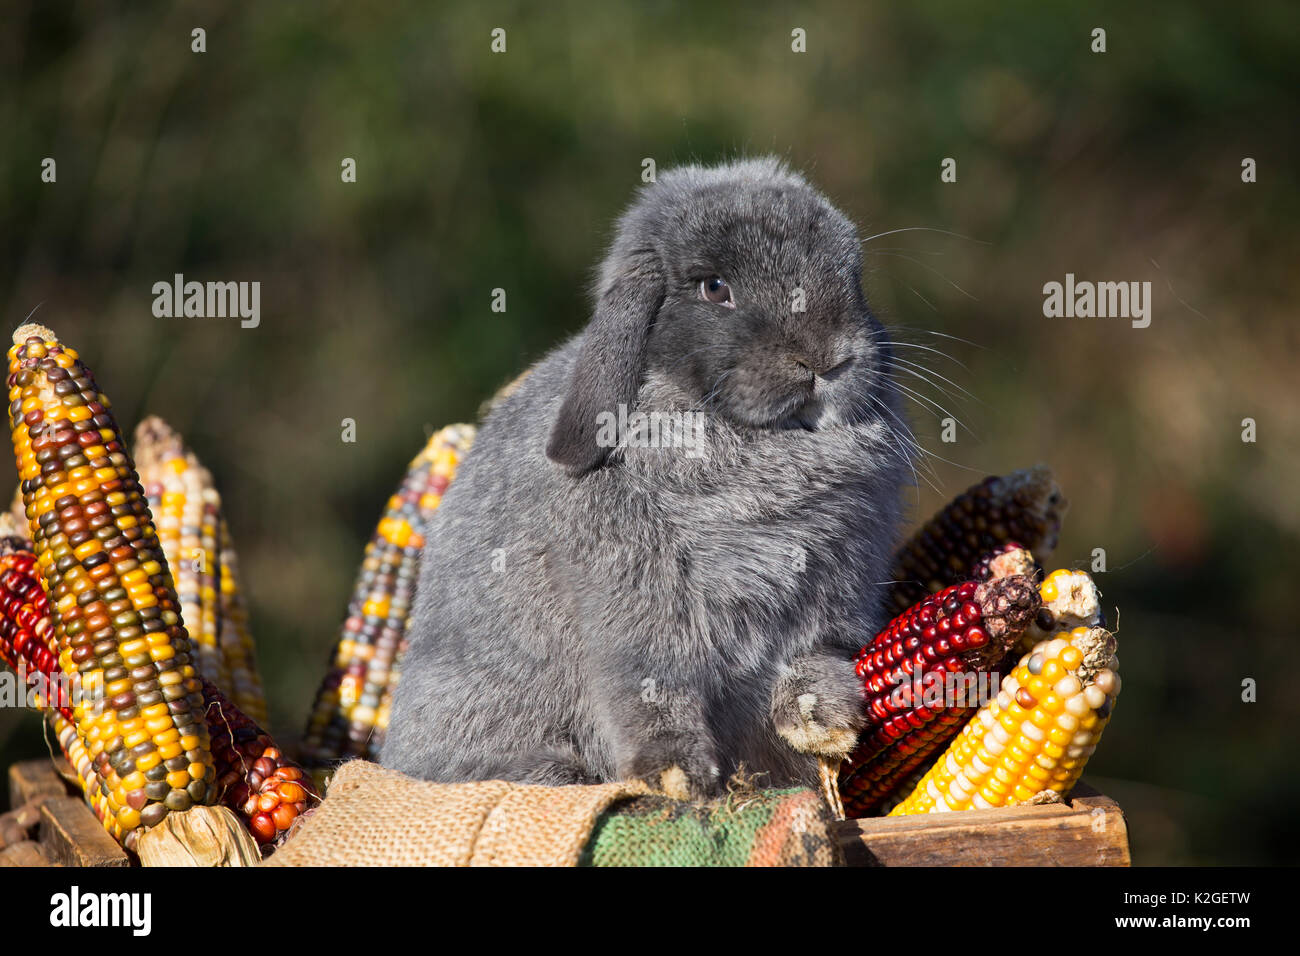 Holland Lop rabbit among oak leaves and Indian corn, Newington, Connecticut, USA Stock Photo